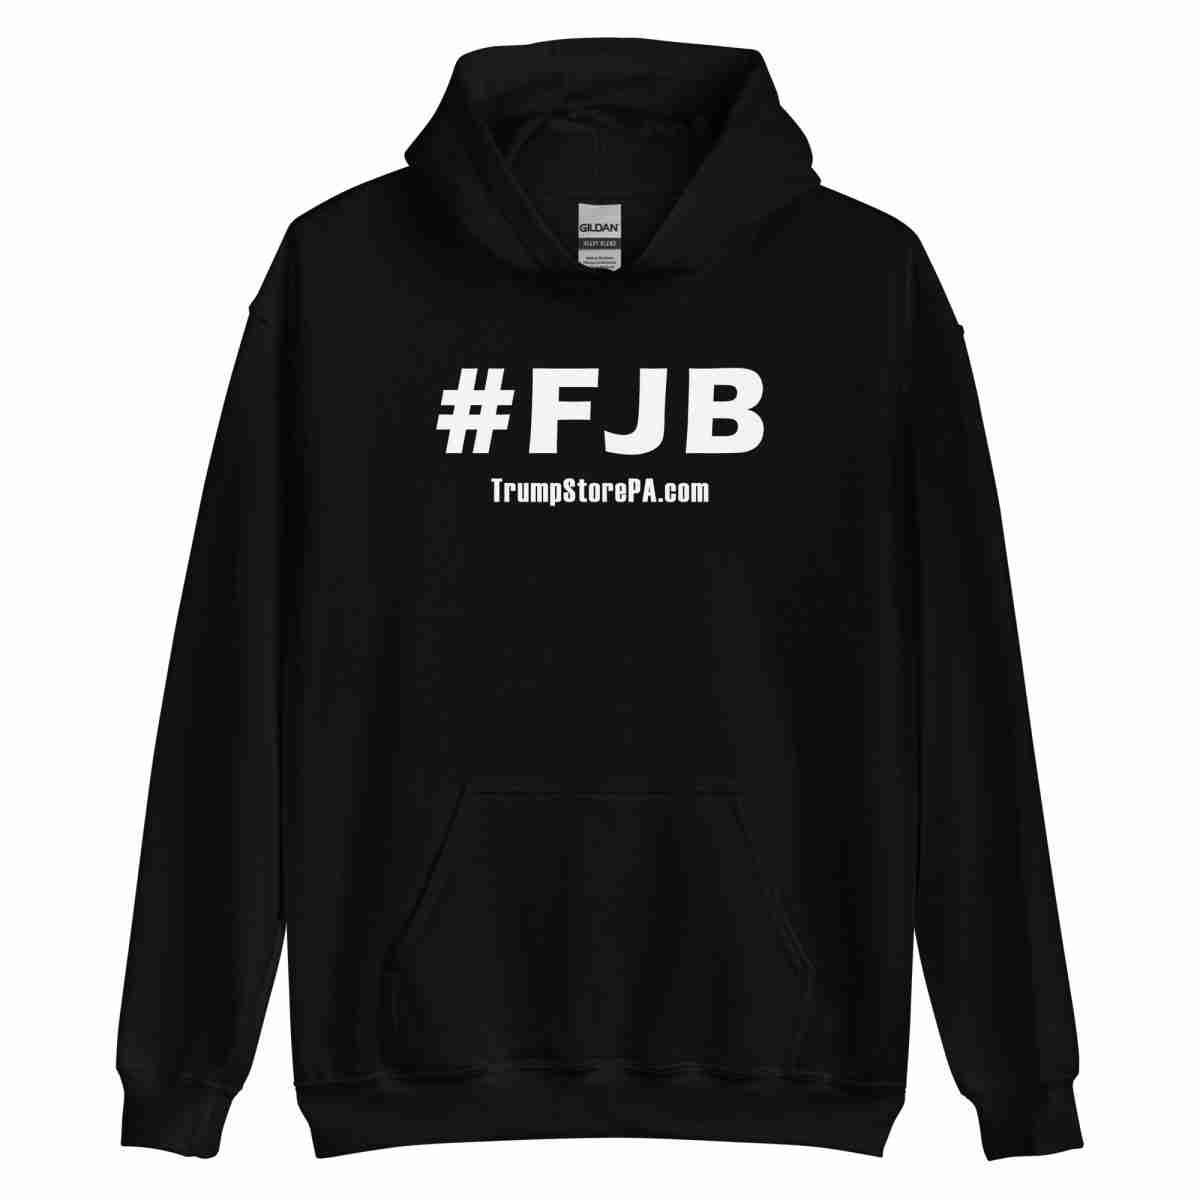 The FJB Hoodie